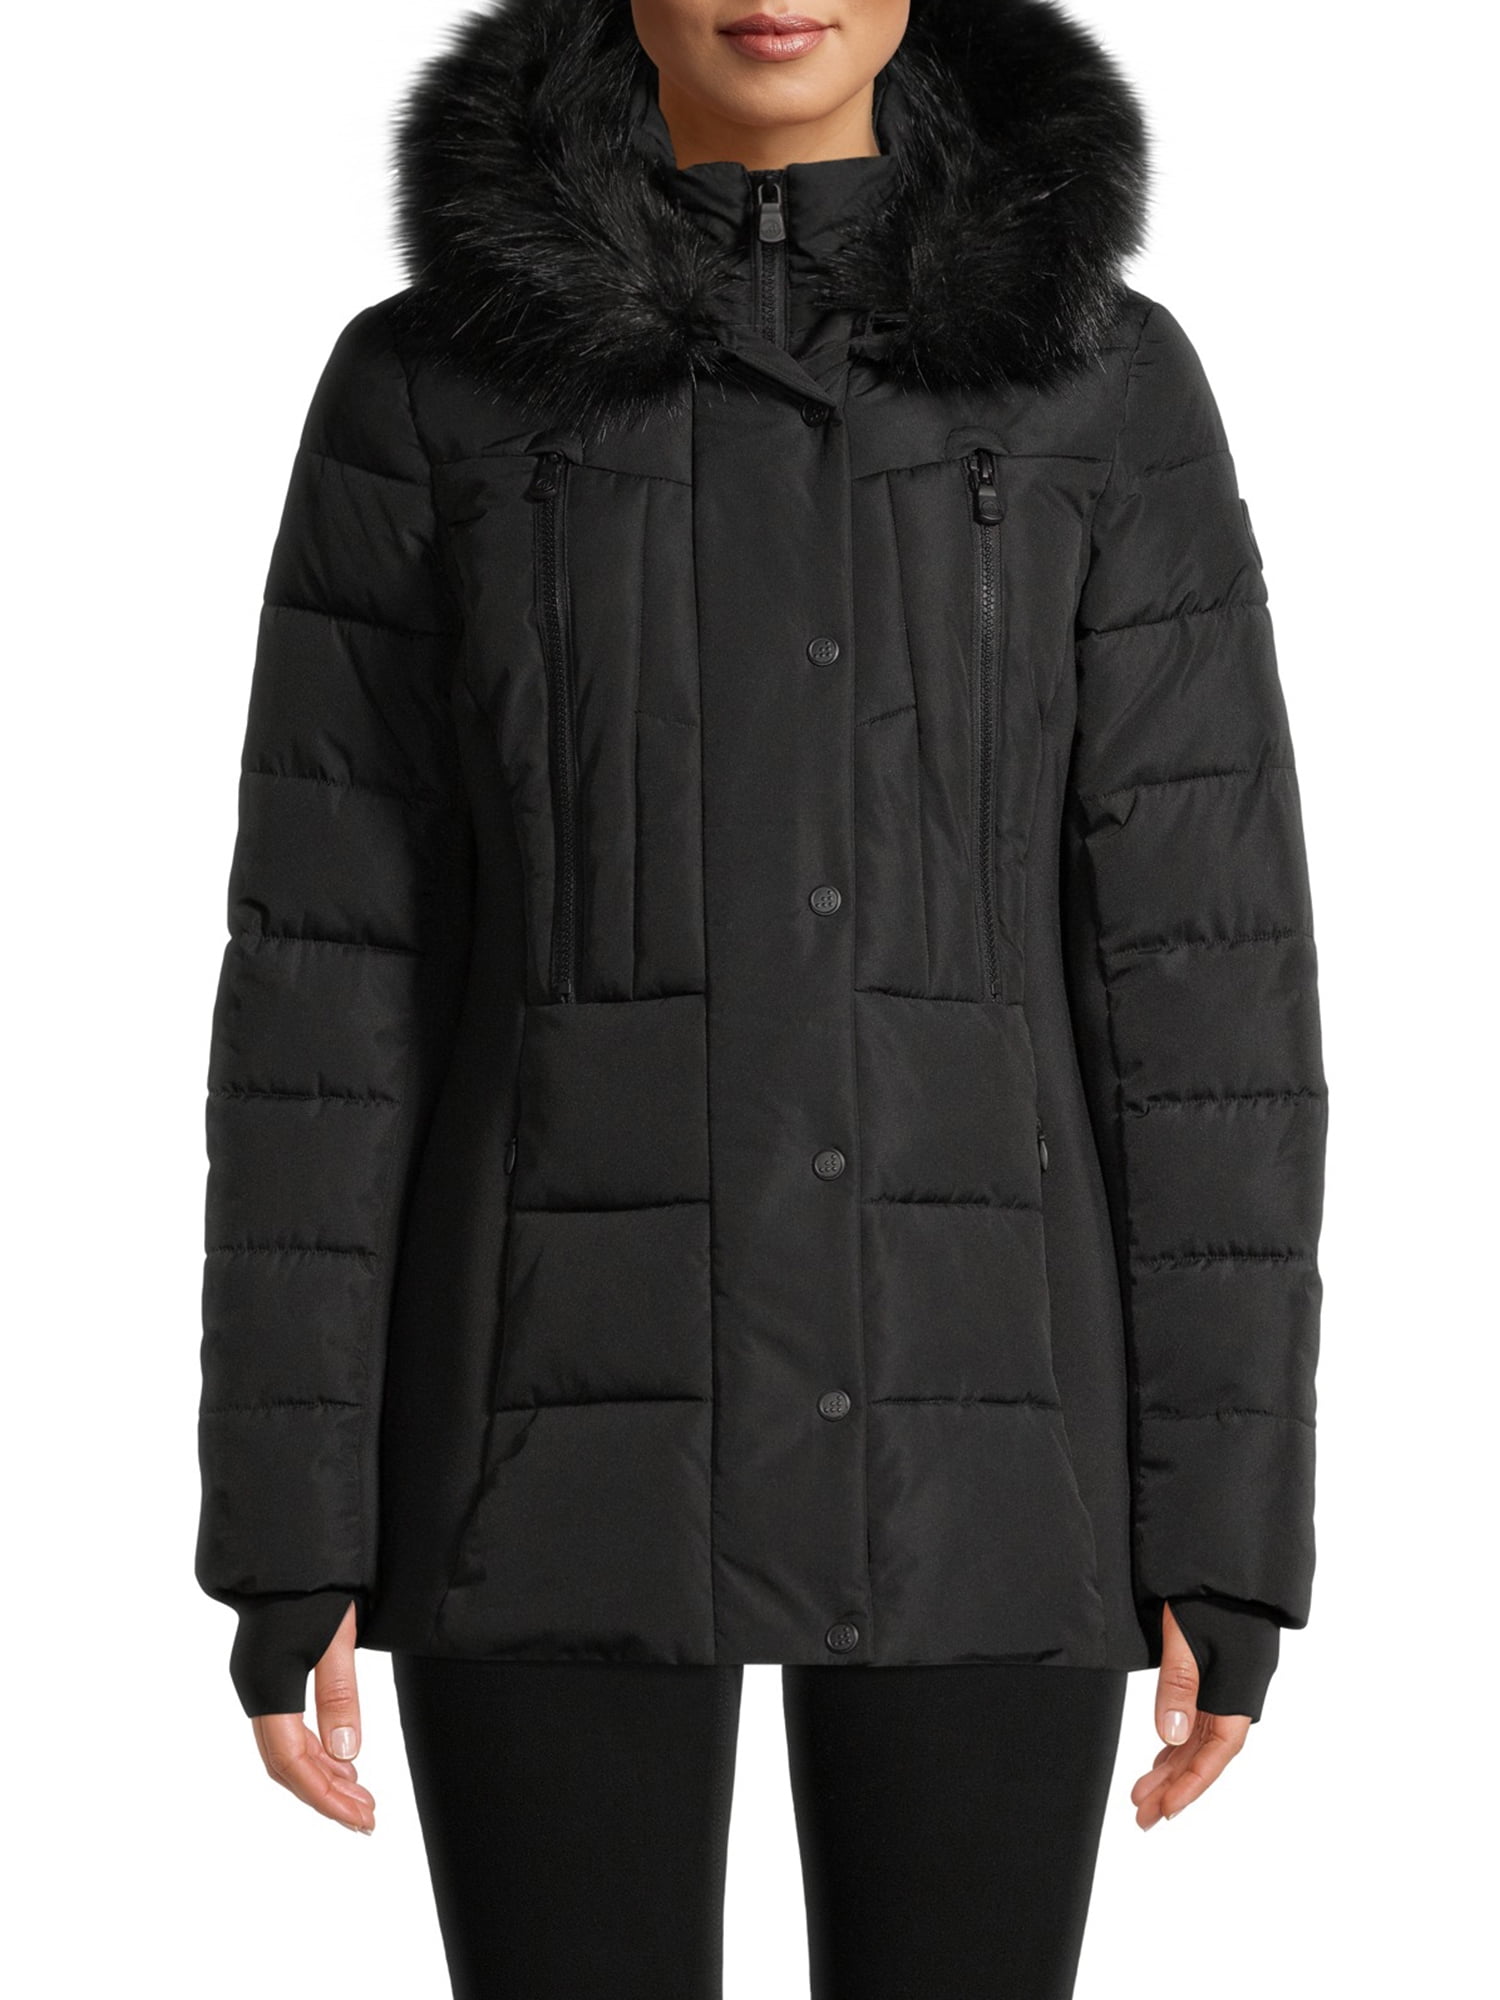 short puffer jacket with fur hood